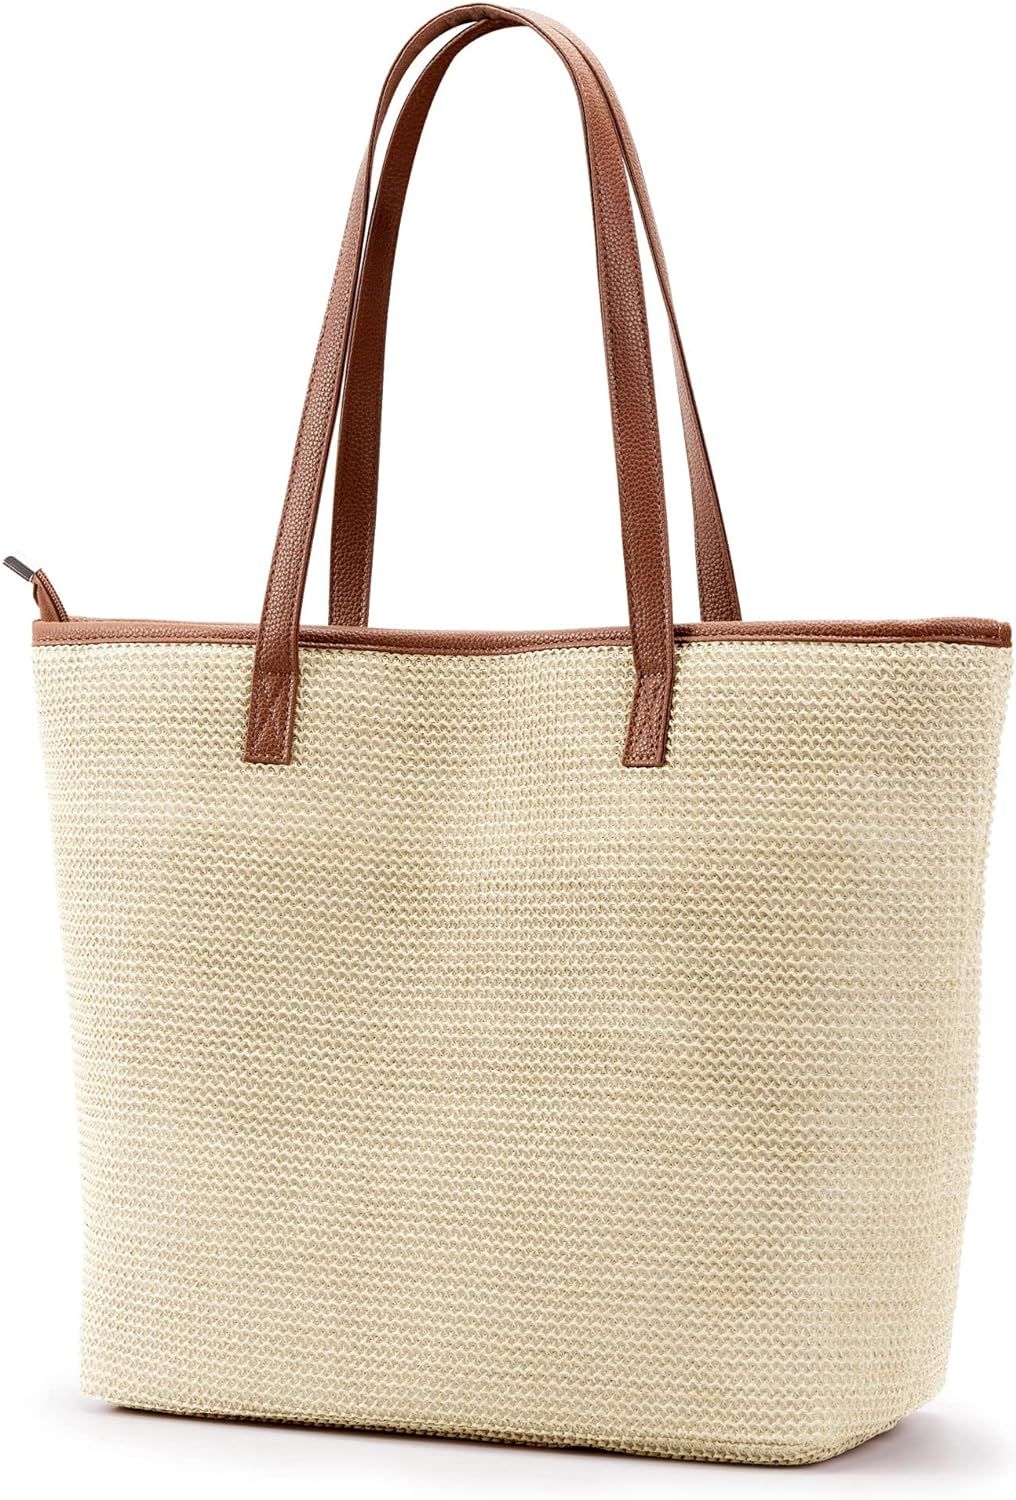 KALIDI Straw Tote Beach Bag Striped Shoulder Handbag Stitch Woven PU Leather Handle Zipper Pocket... | Amazon (US)